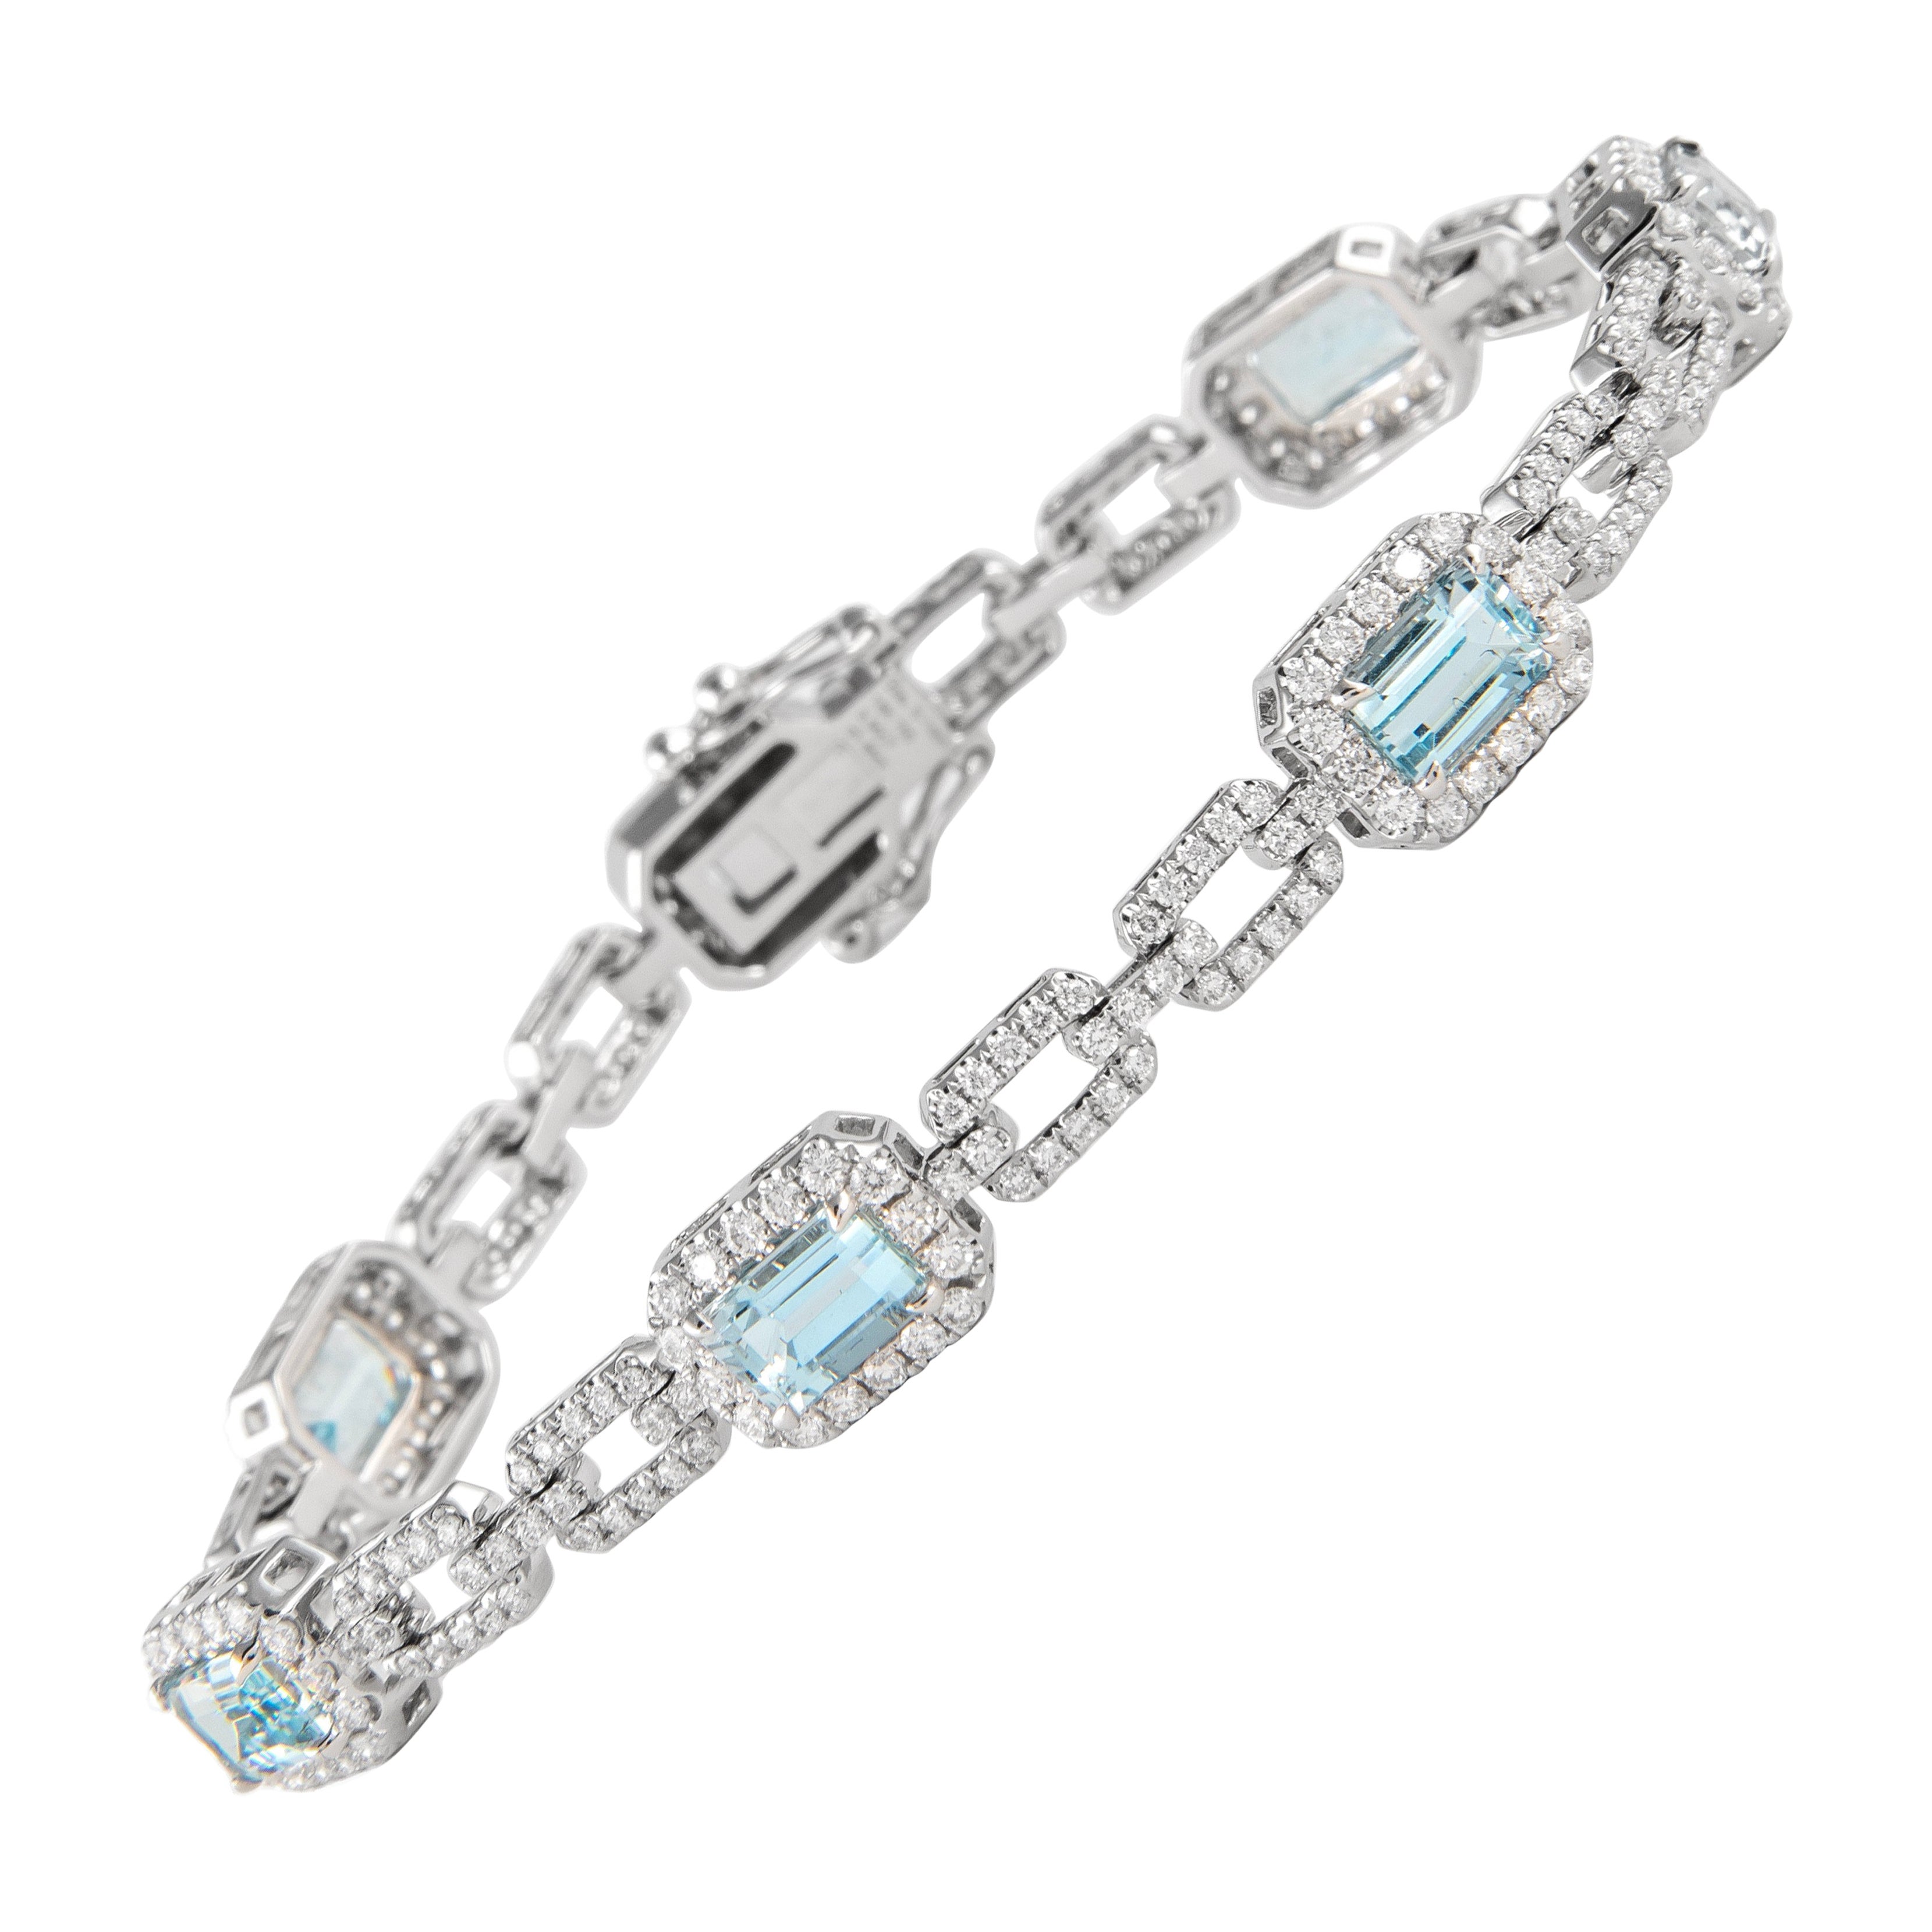 Alexander Beverly Hills 5.71 Carat Aquamarine & Diamond Bracelet 18k White Gold